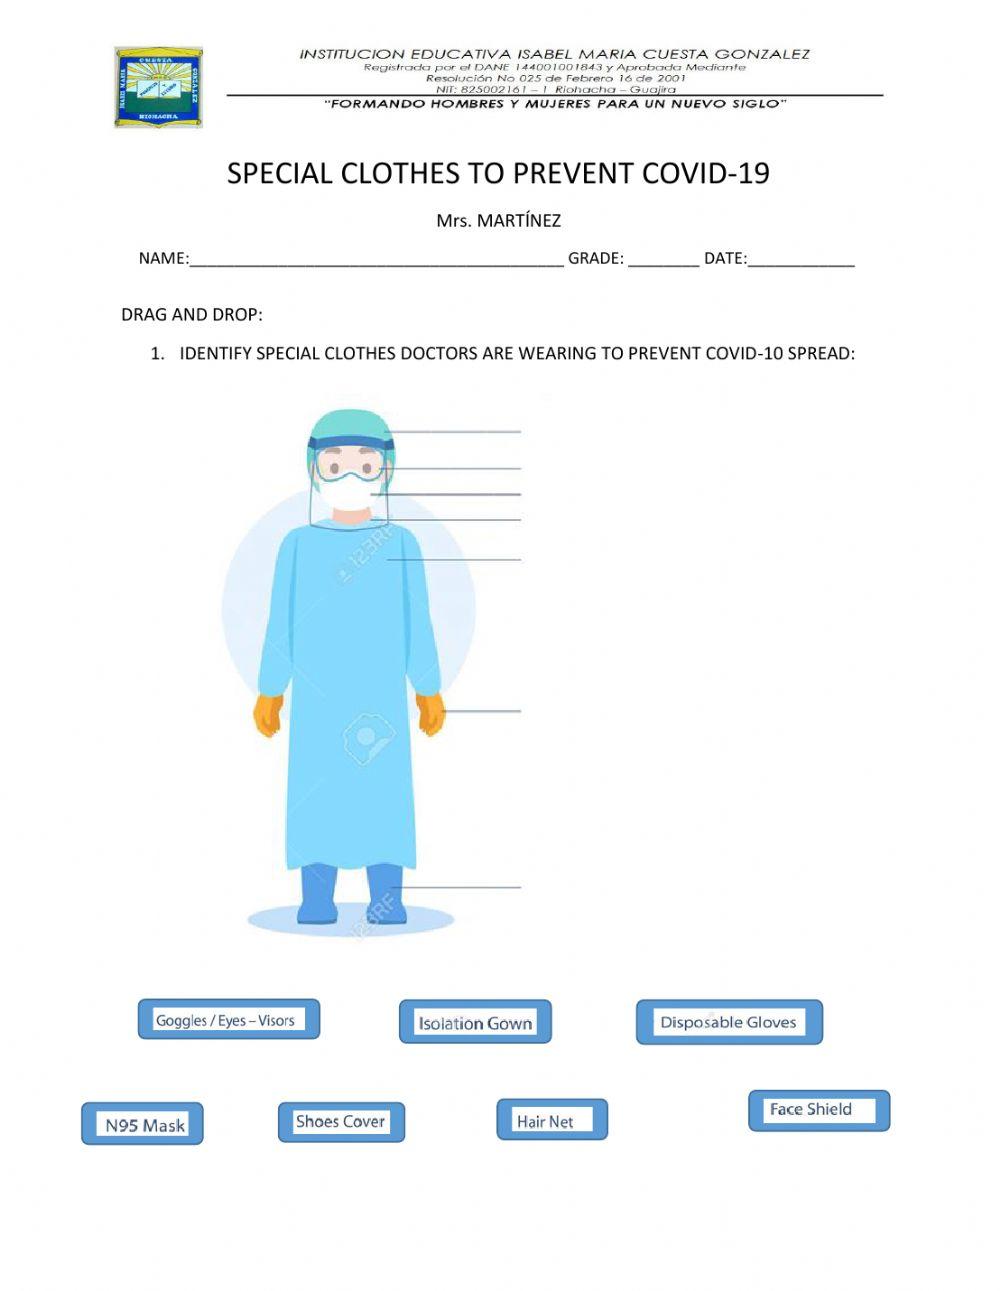 Special clothes to prevent coronavirus